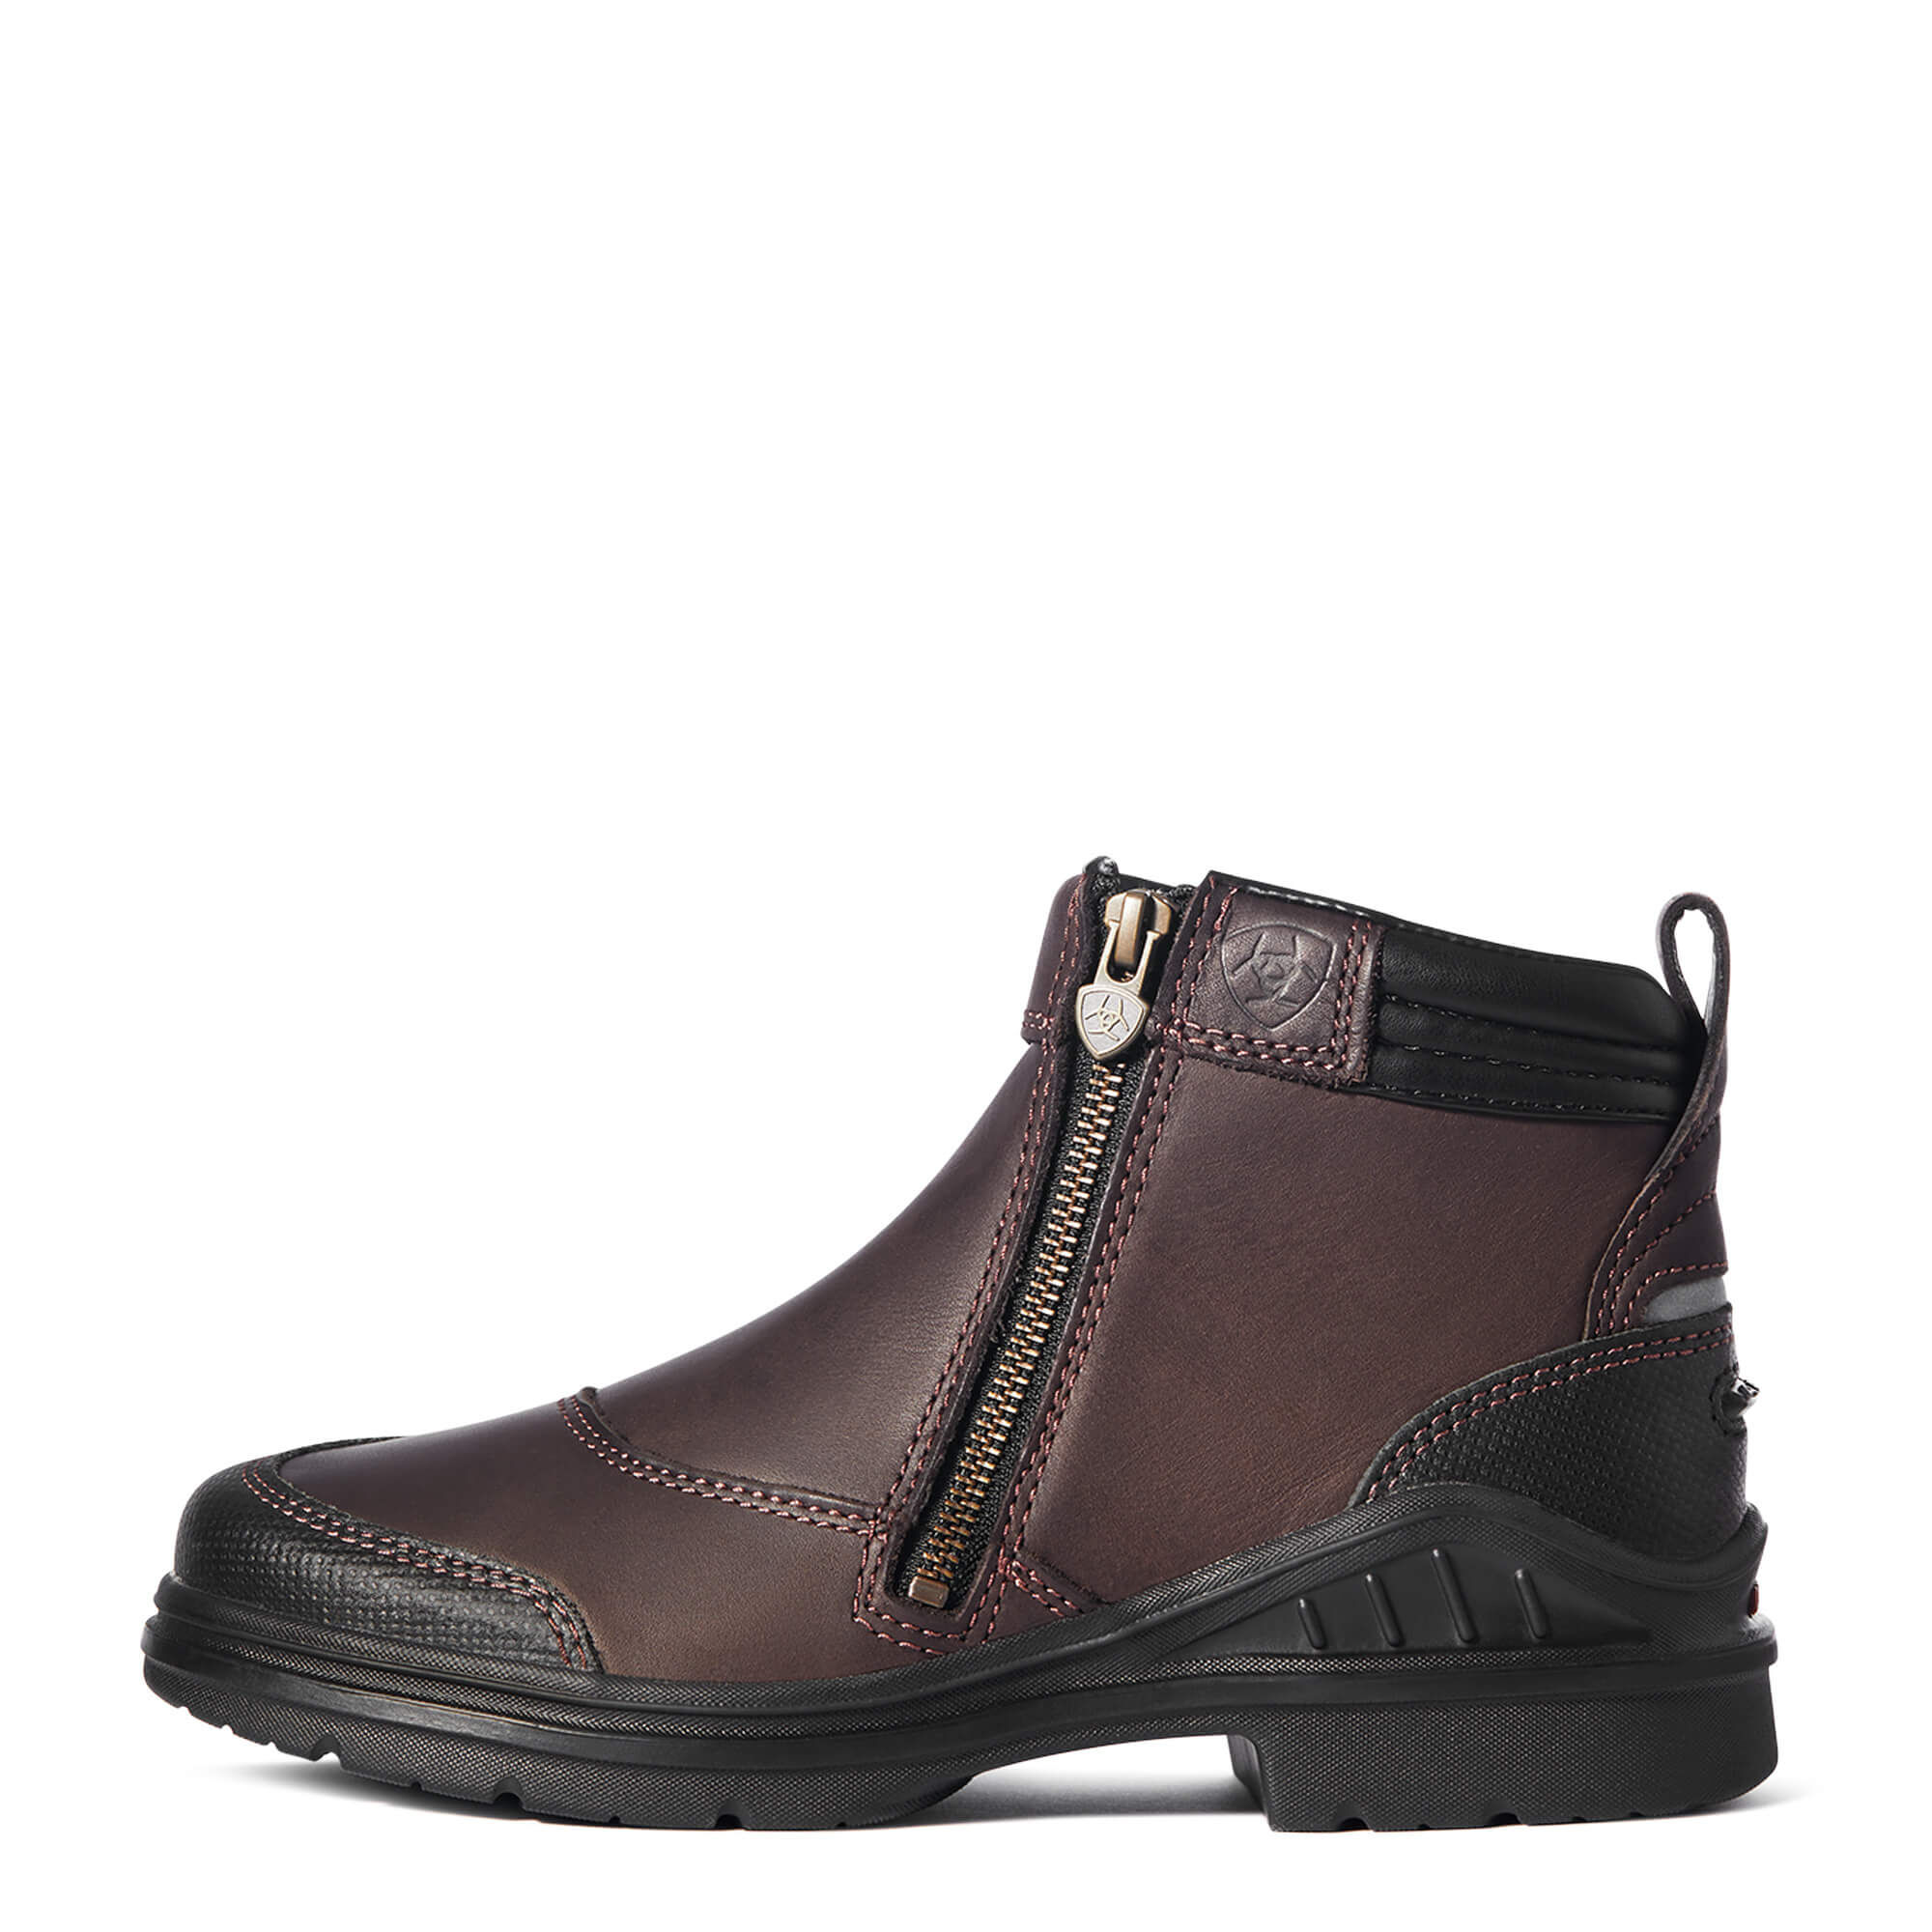 Ariat Barnyard Womens Side Zip Boots Adults UK6.5 Dark Brown 